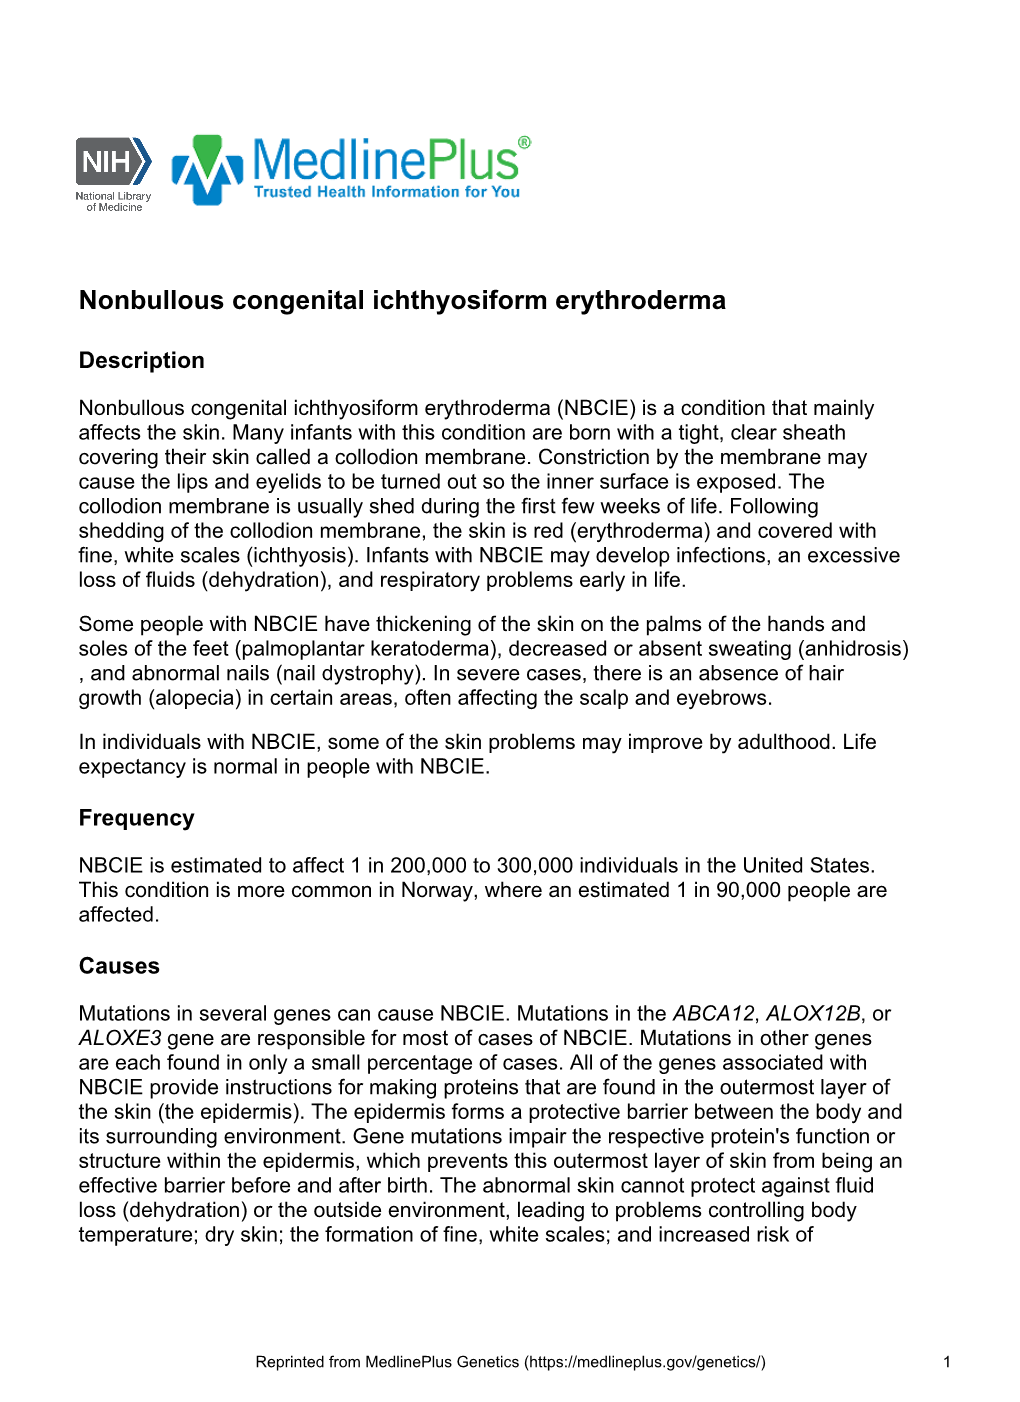 Nonbullous Congenital Ichthyosiform Erythroderma